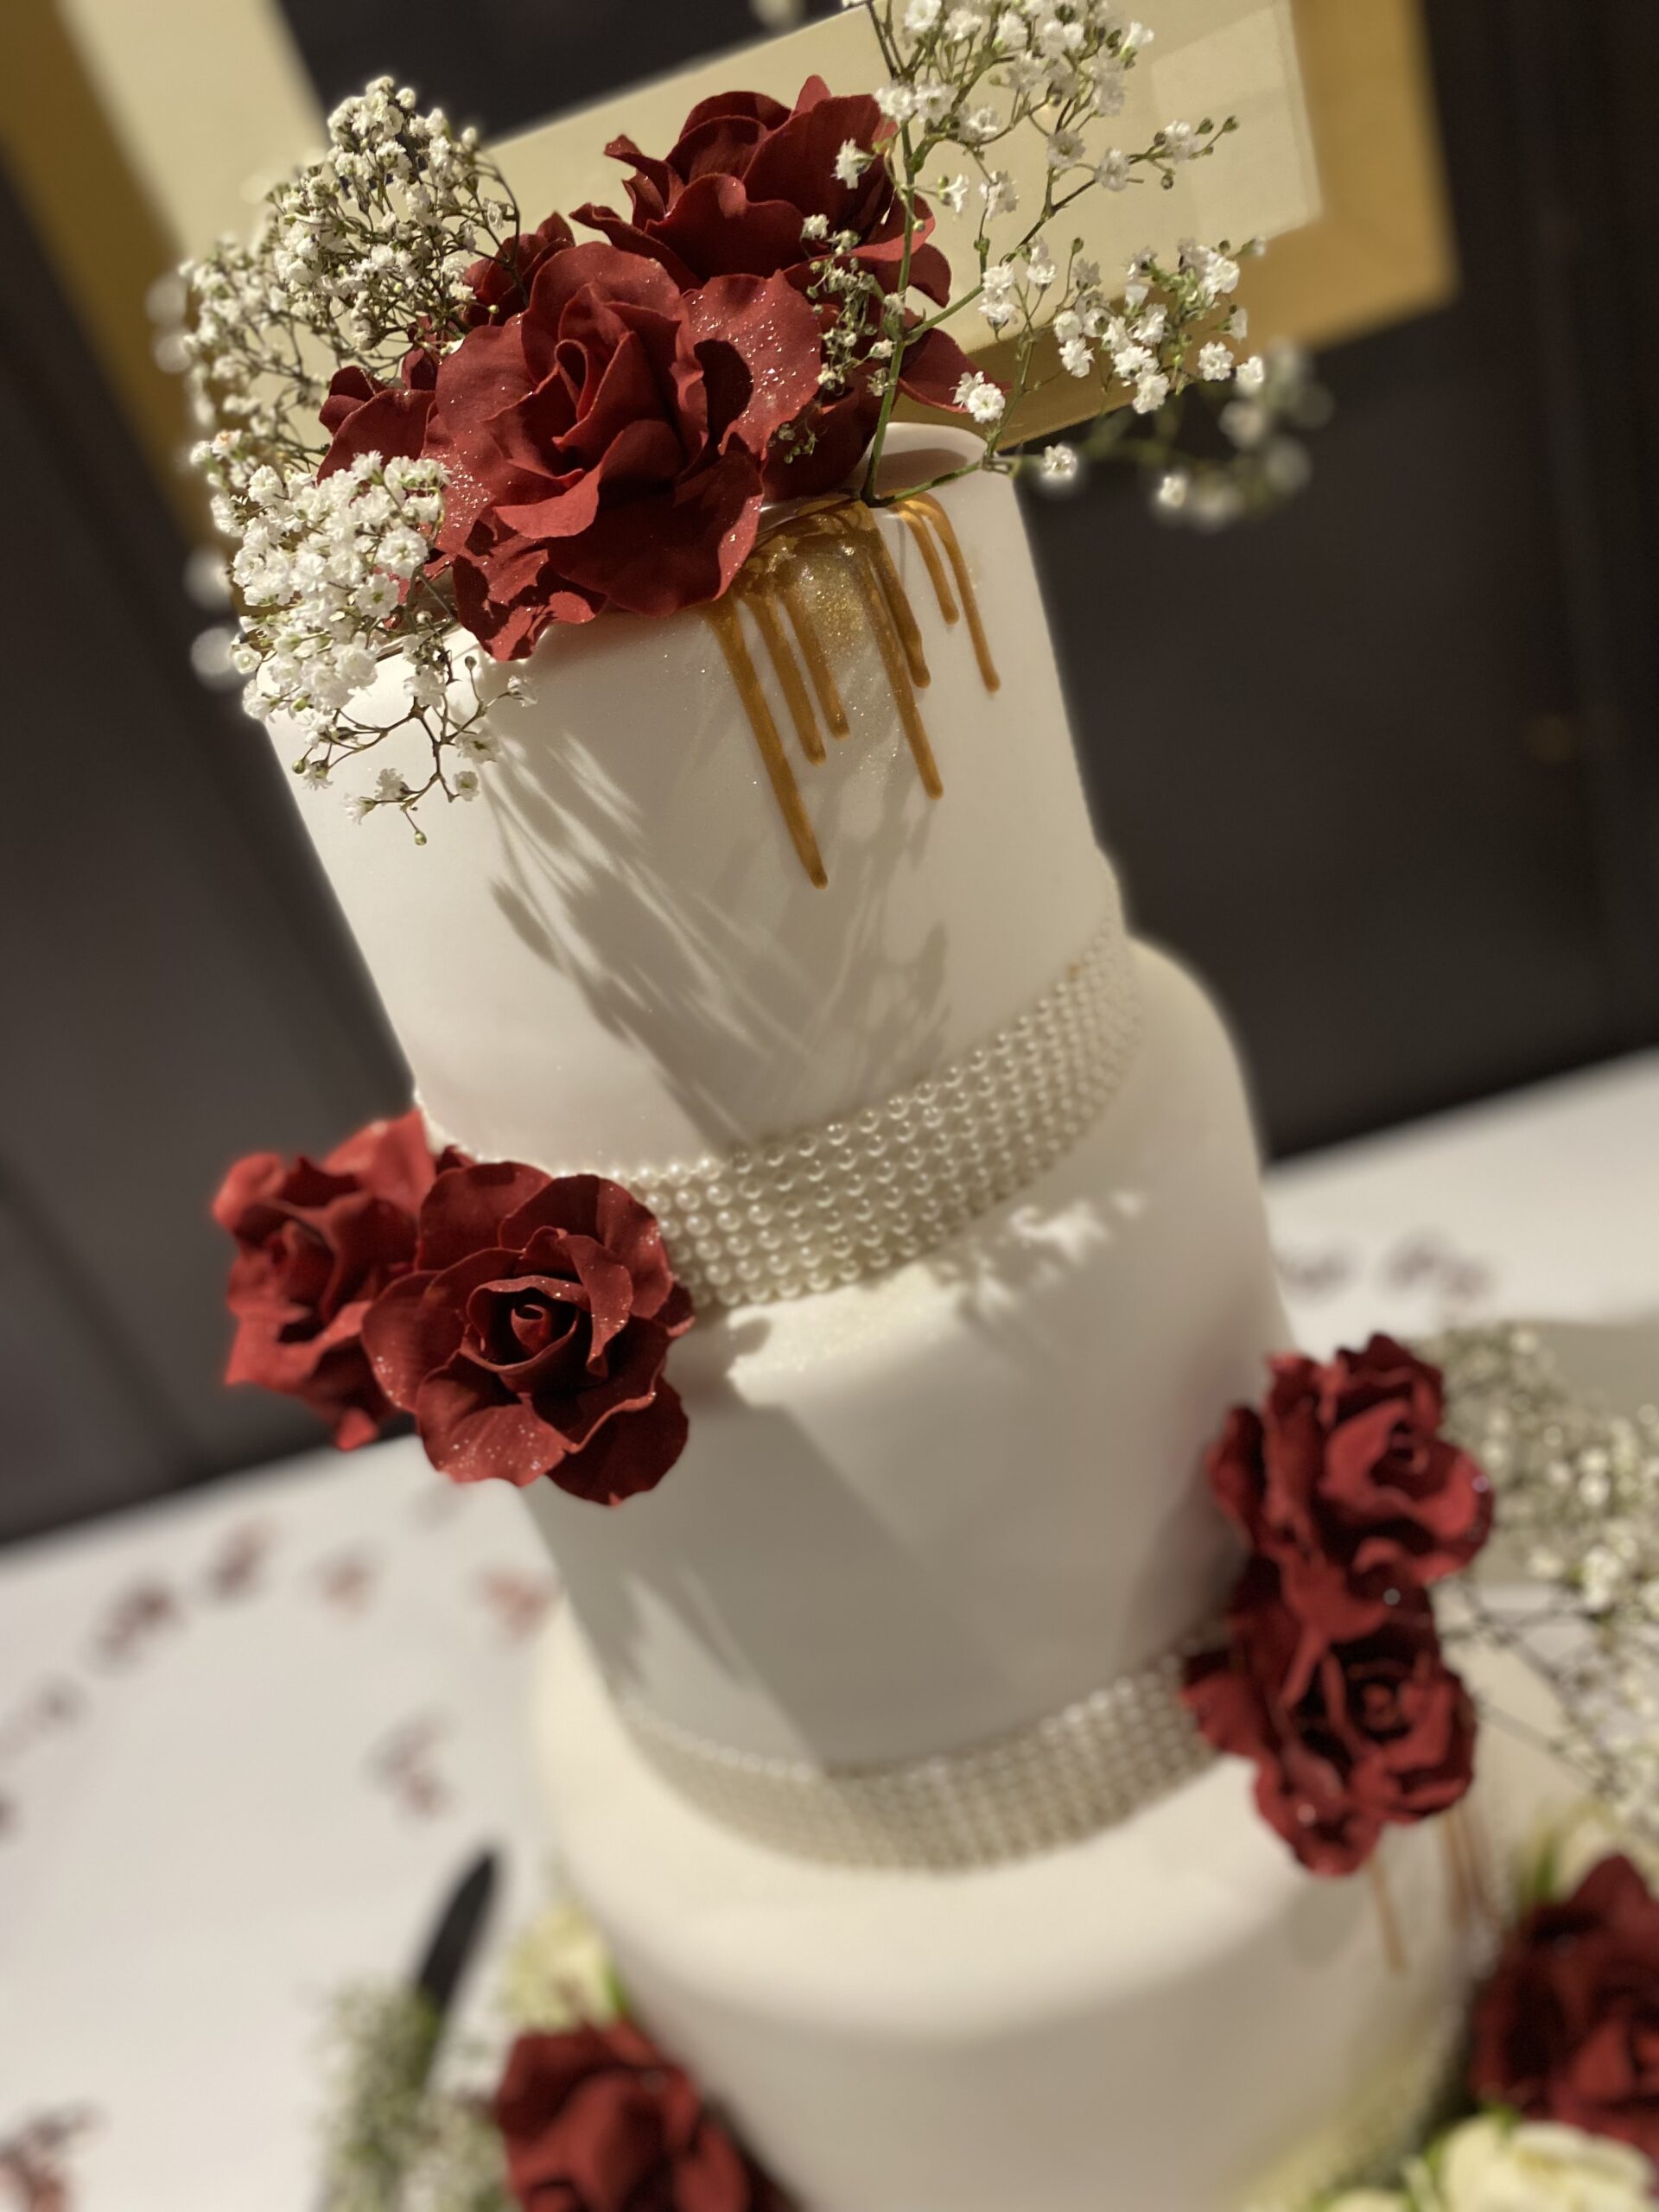 Cream & red roses wedding cake